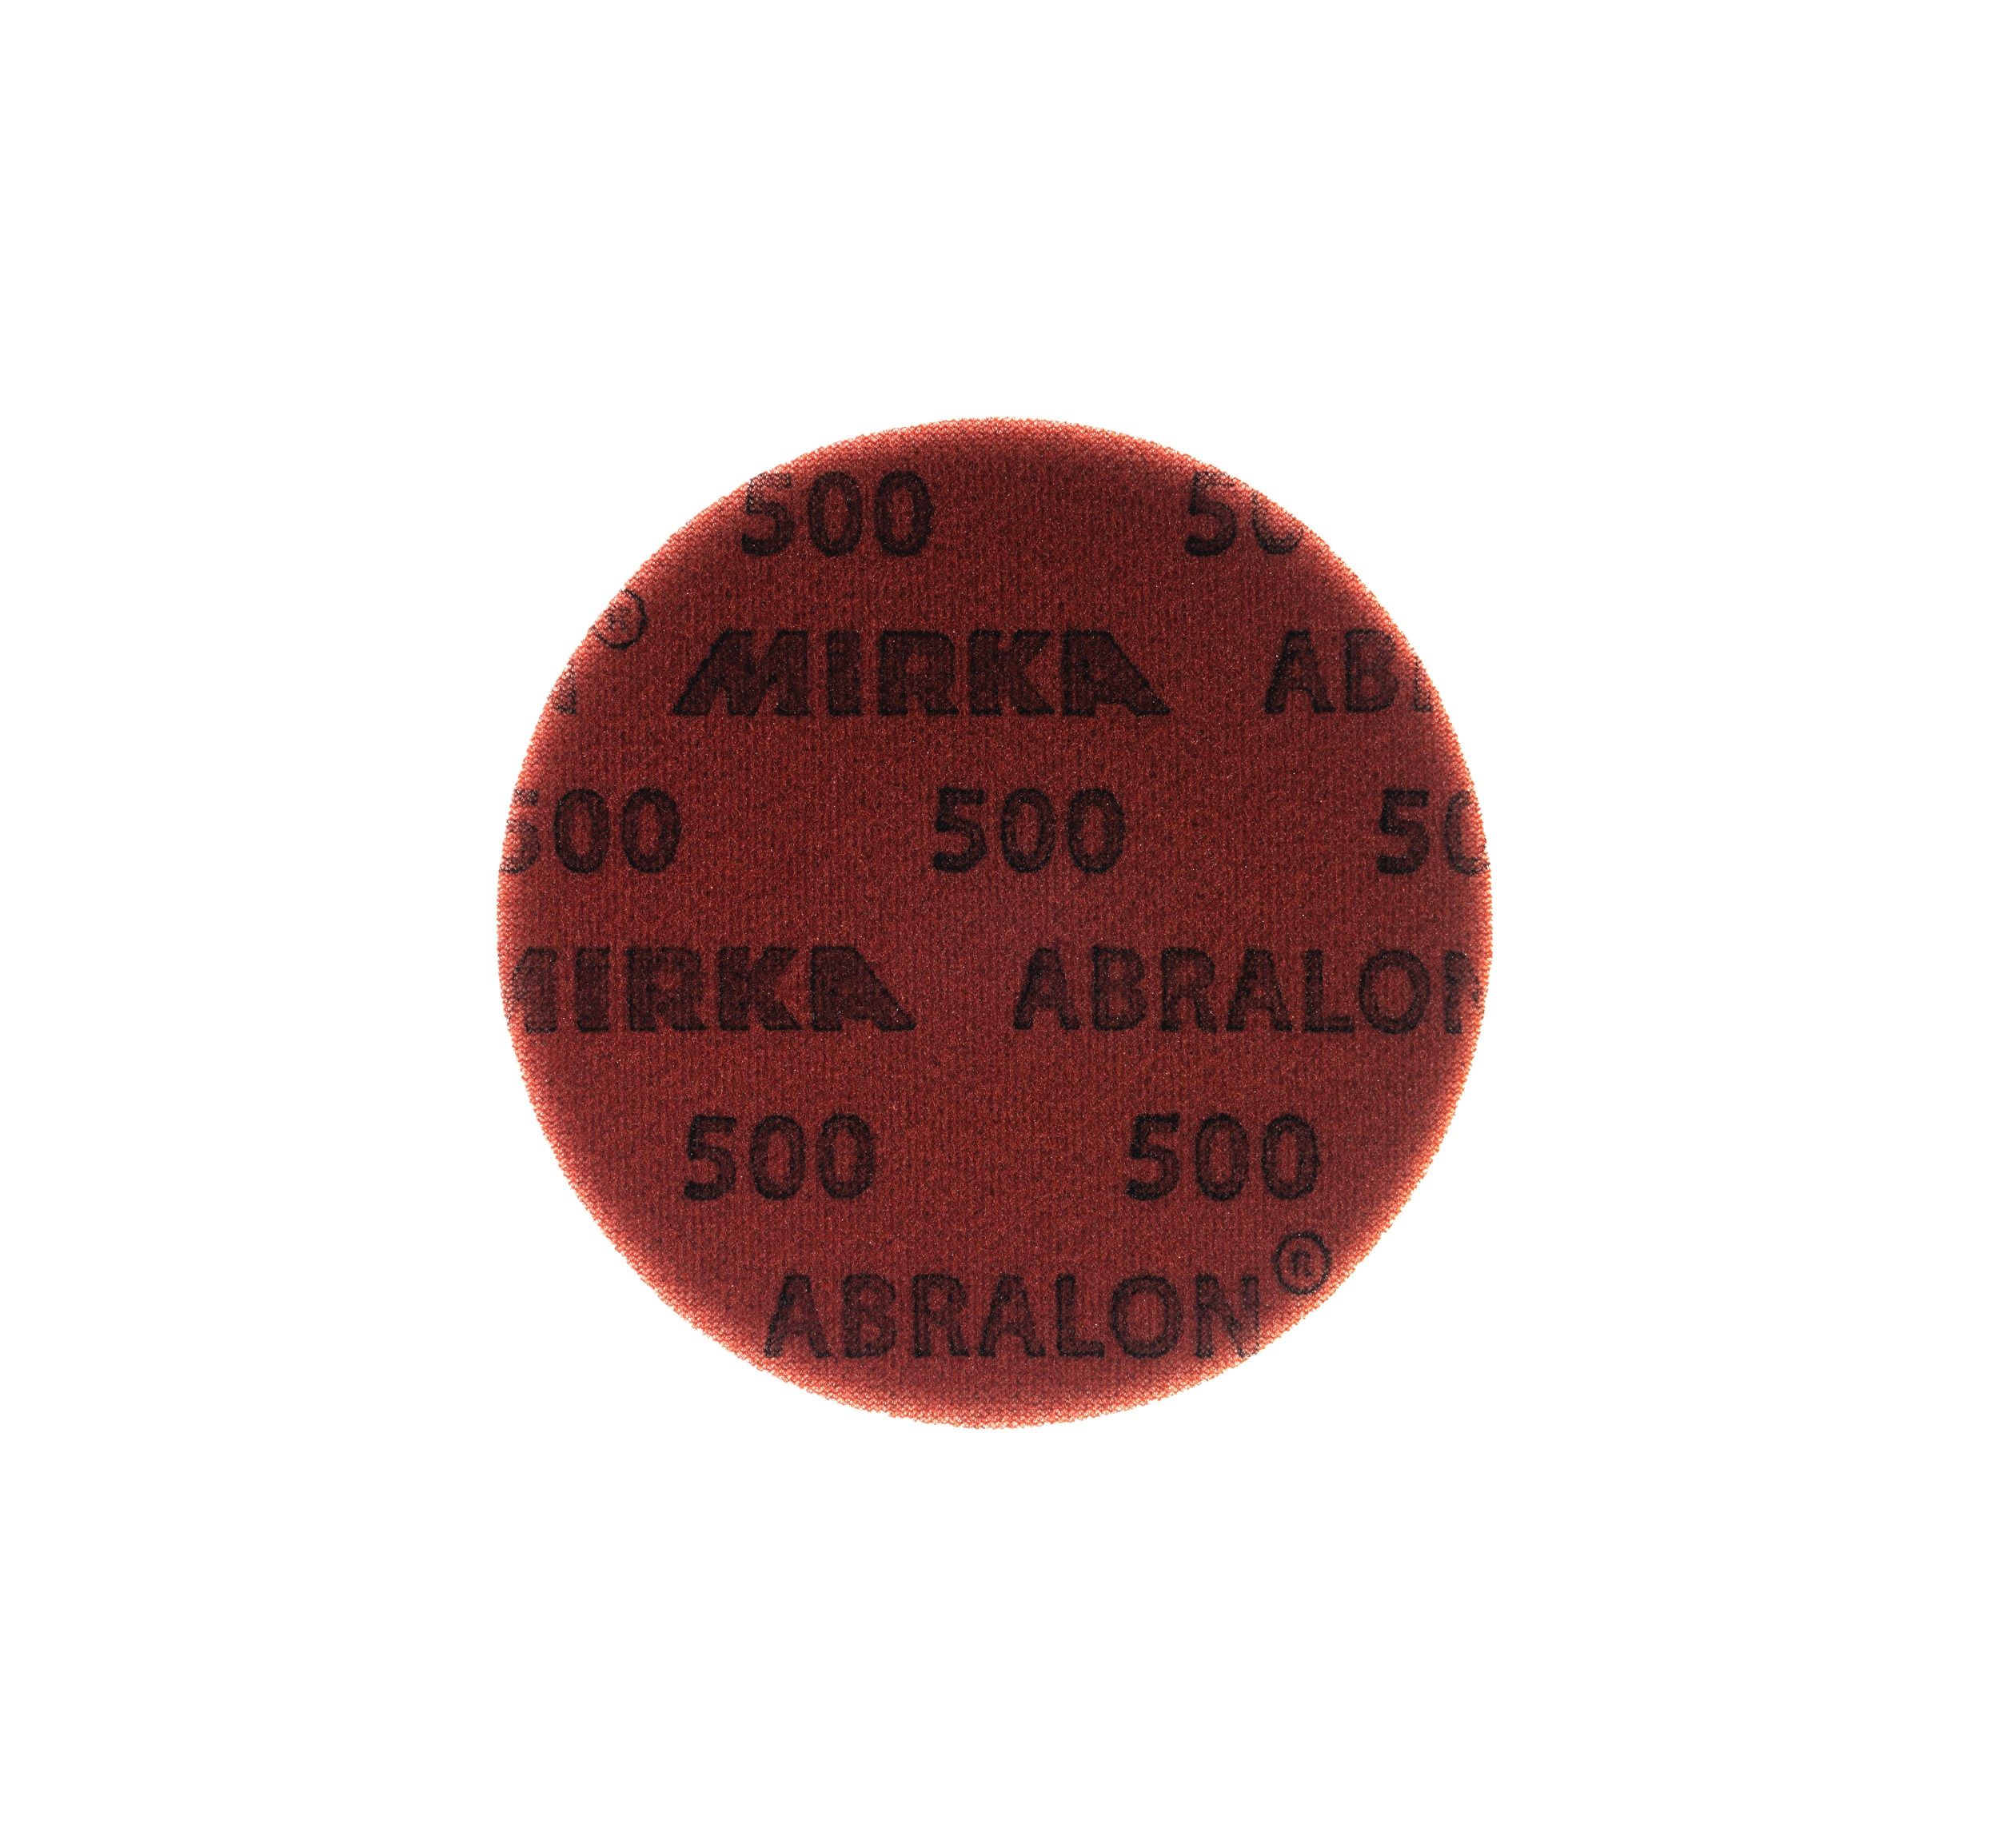 Galaxy Ø 125 mm disque abrasif auto-agrippant… - Mirka